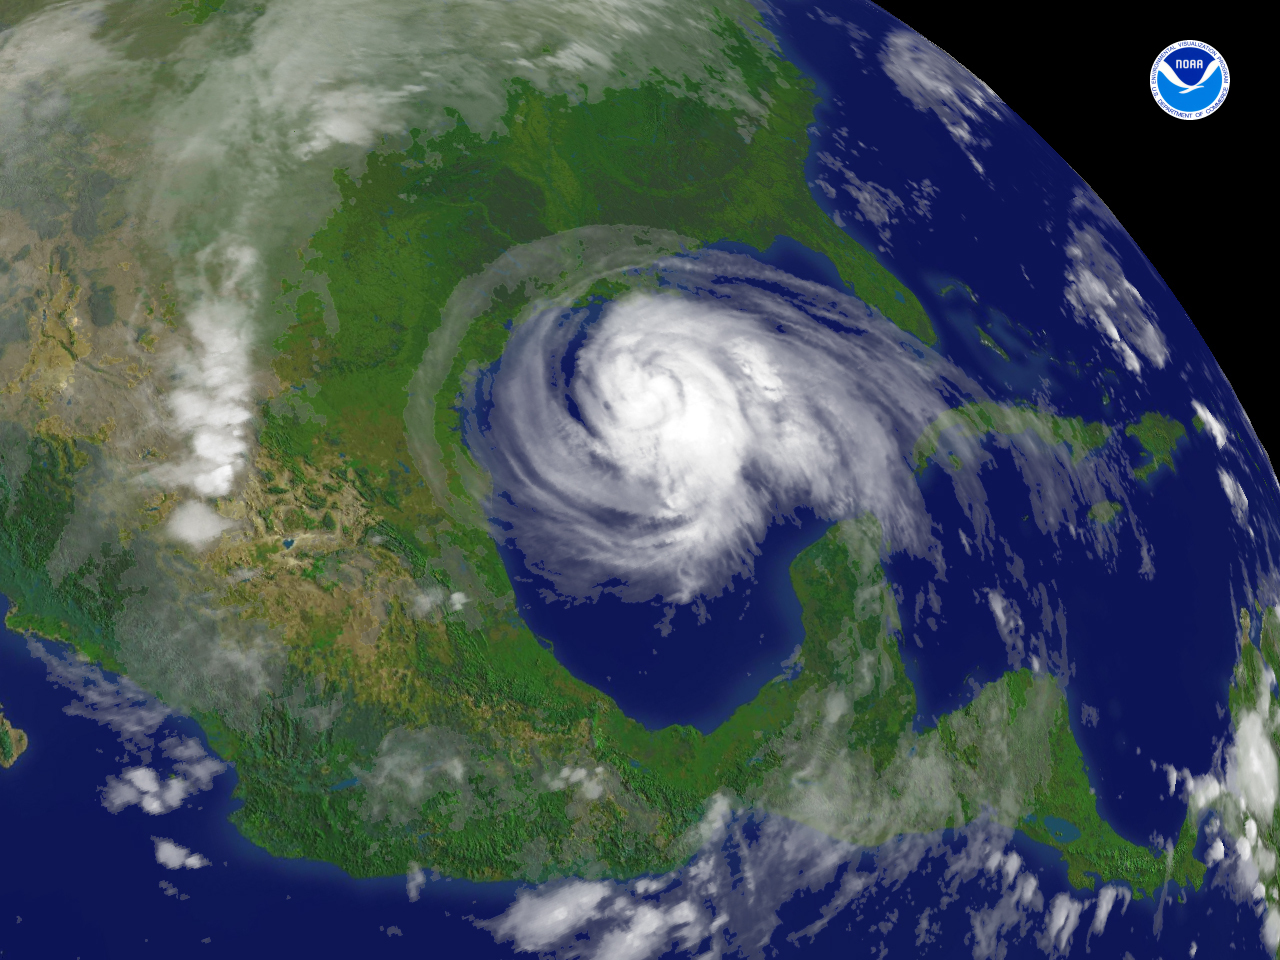 Hurricane Ike regional imagery, 2008.09.12 at 0845Z. Centerpoint Latitude: 26:54:30N Longitude: 91:31:08W.
